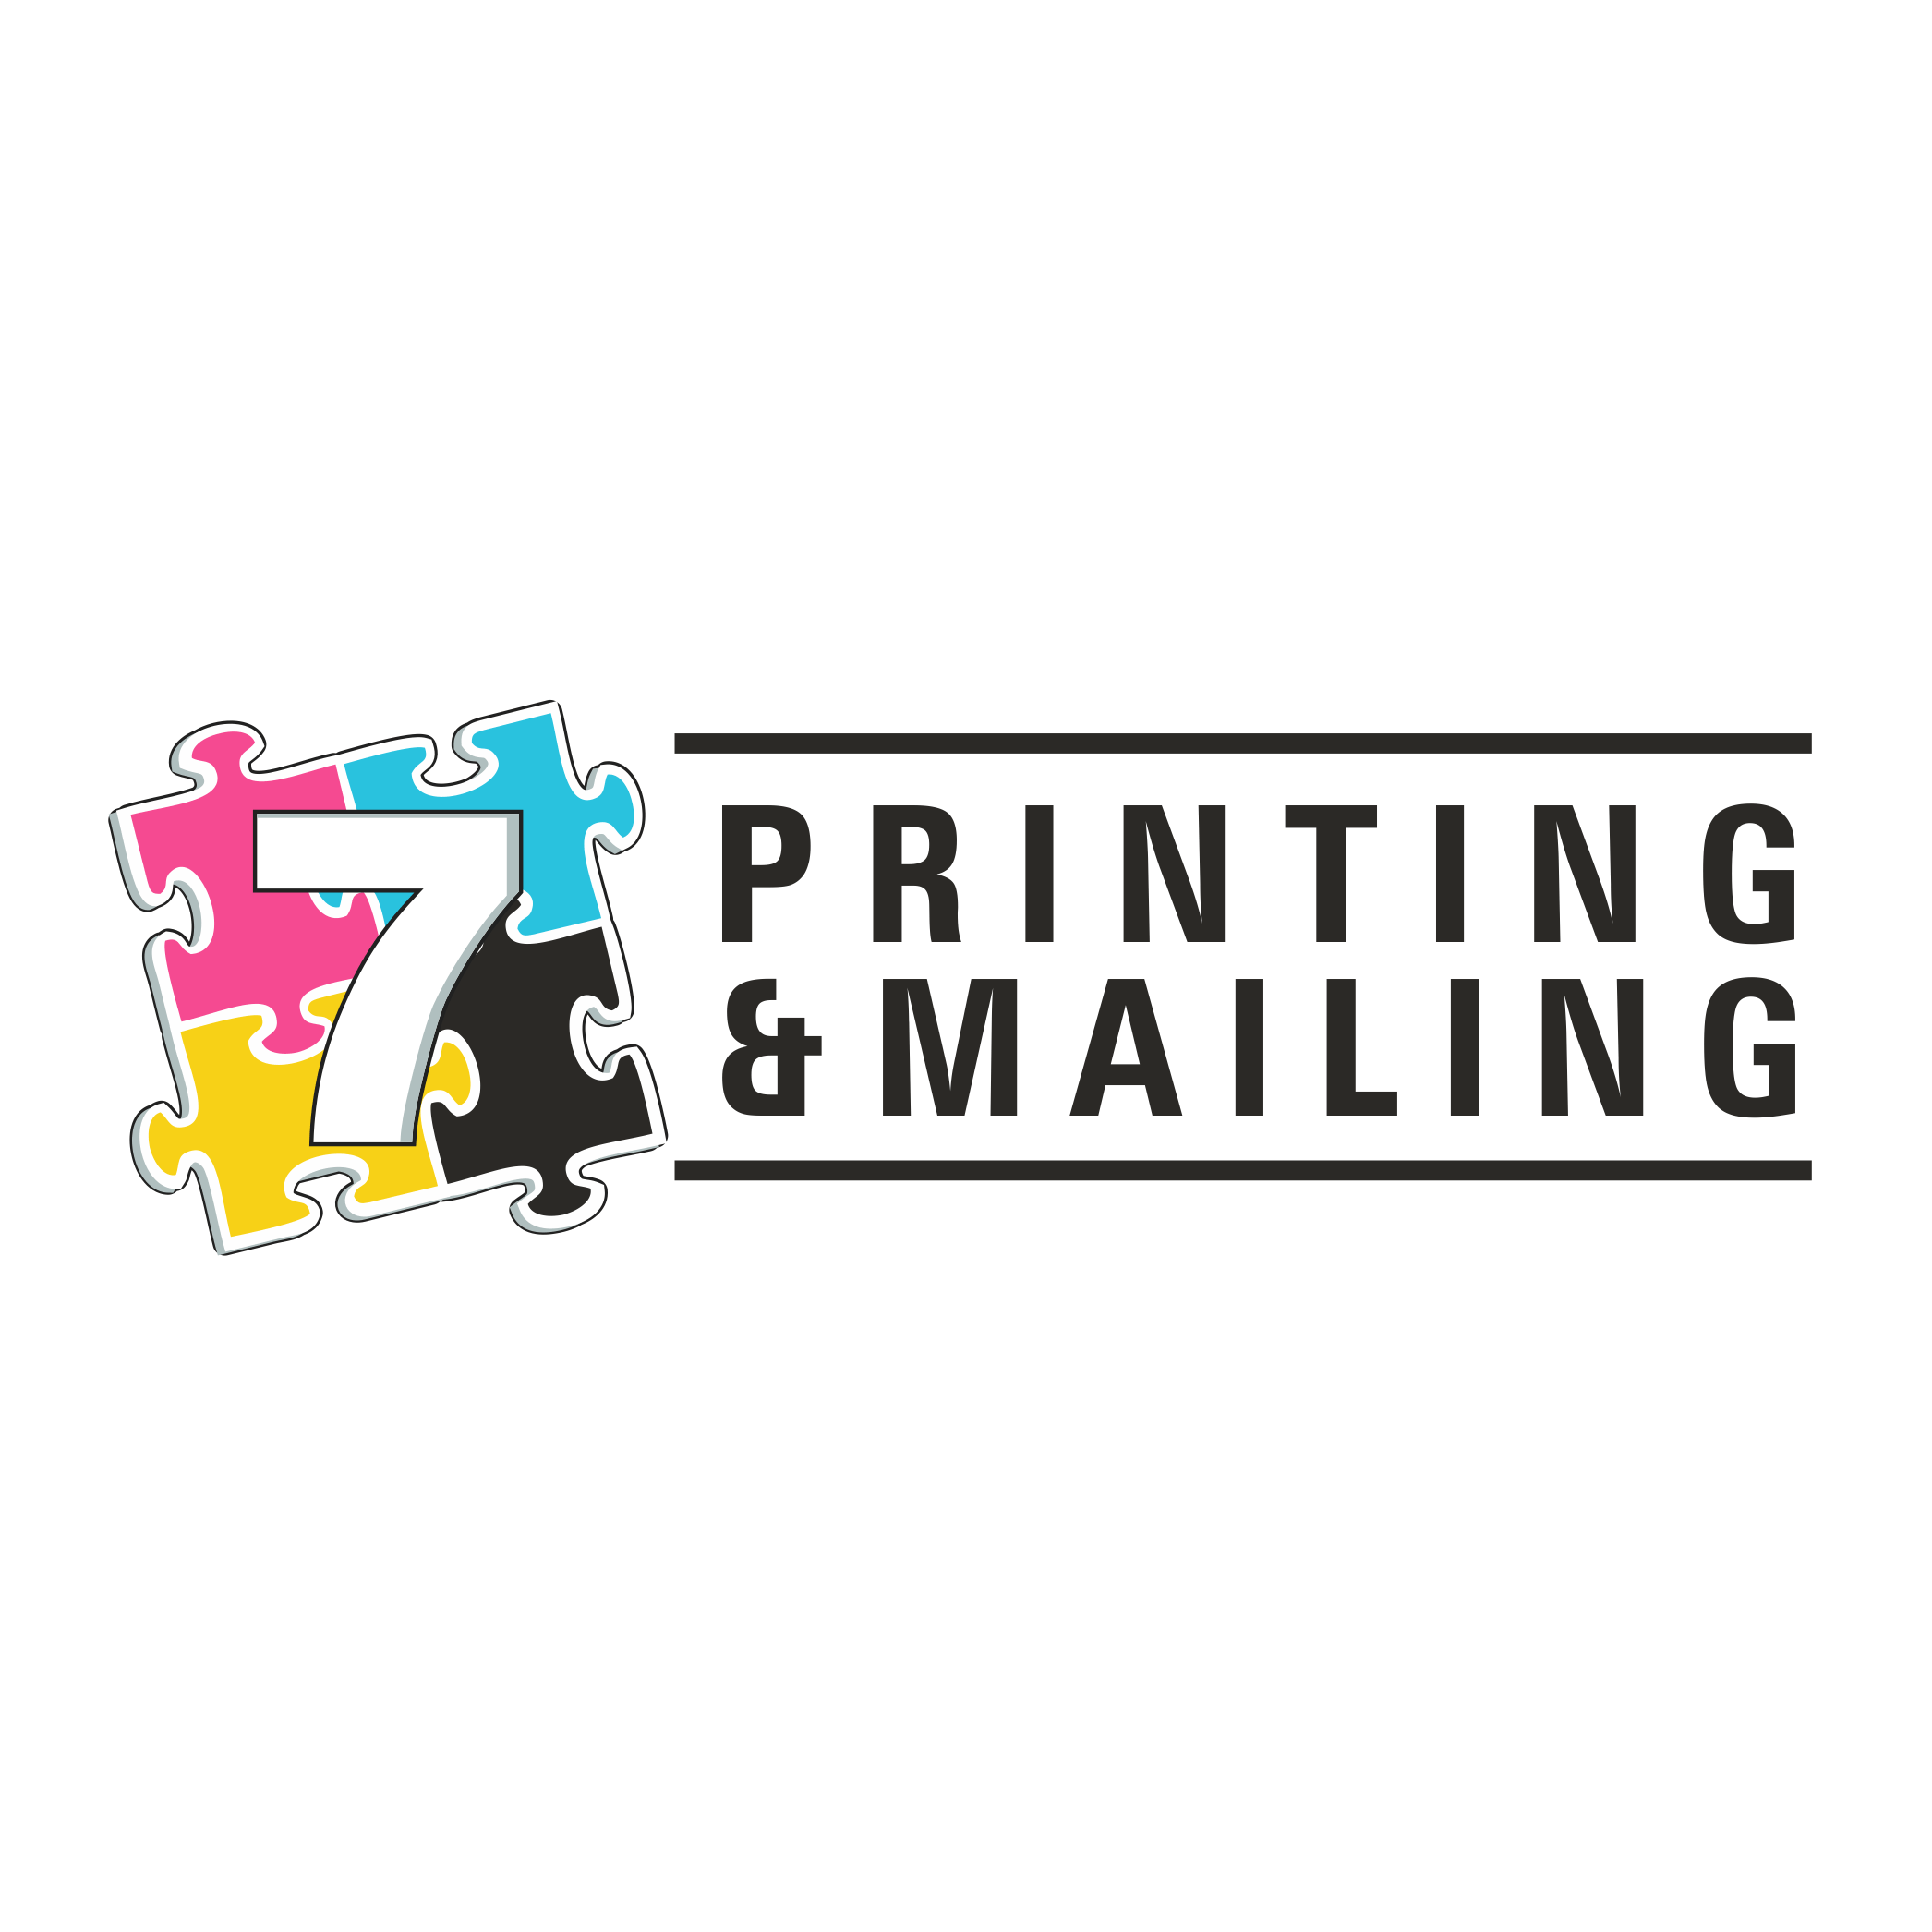 7 Printing and Mailing - Las Vegas, NV 89120 - (702)776-7460 | ShowMeLocal.com